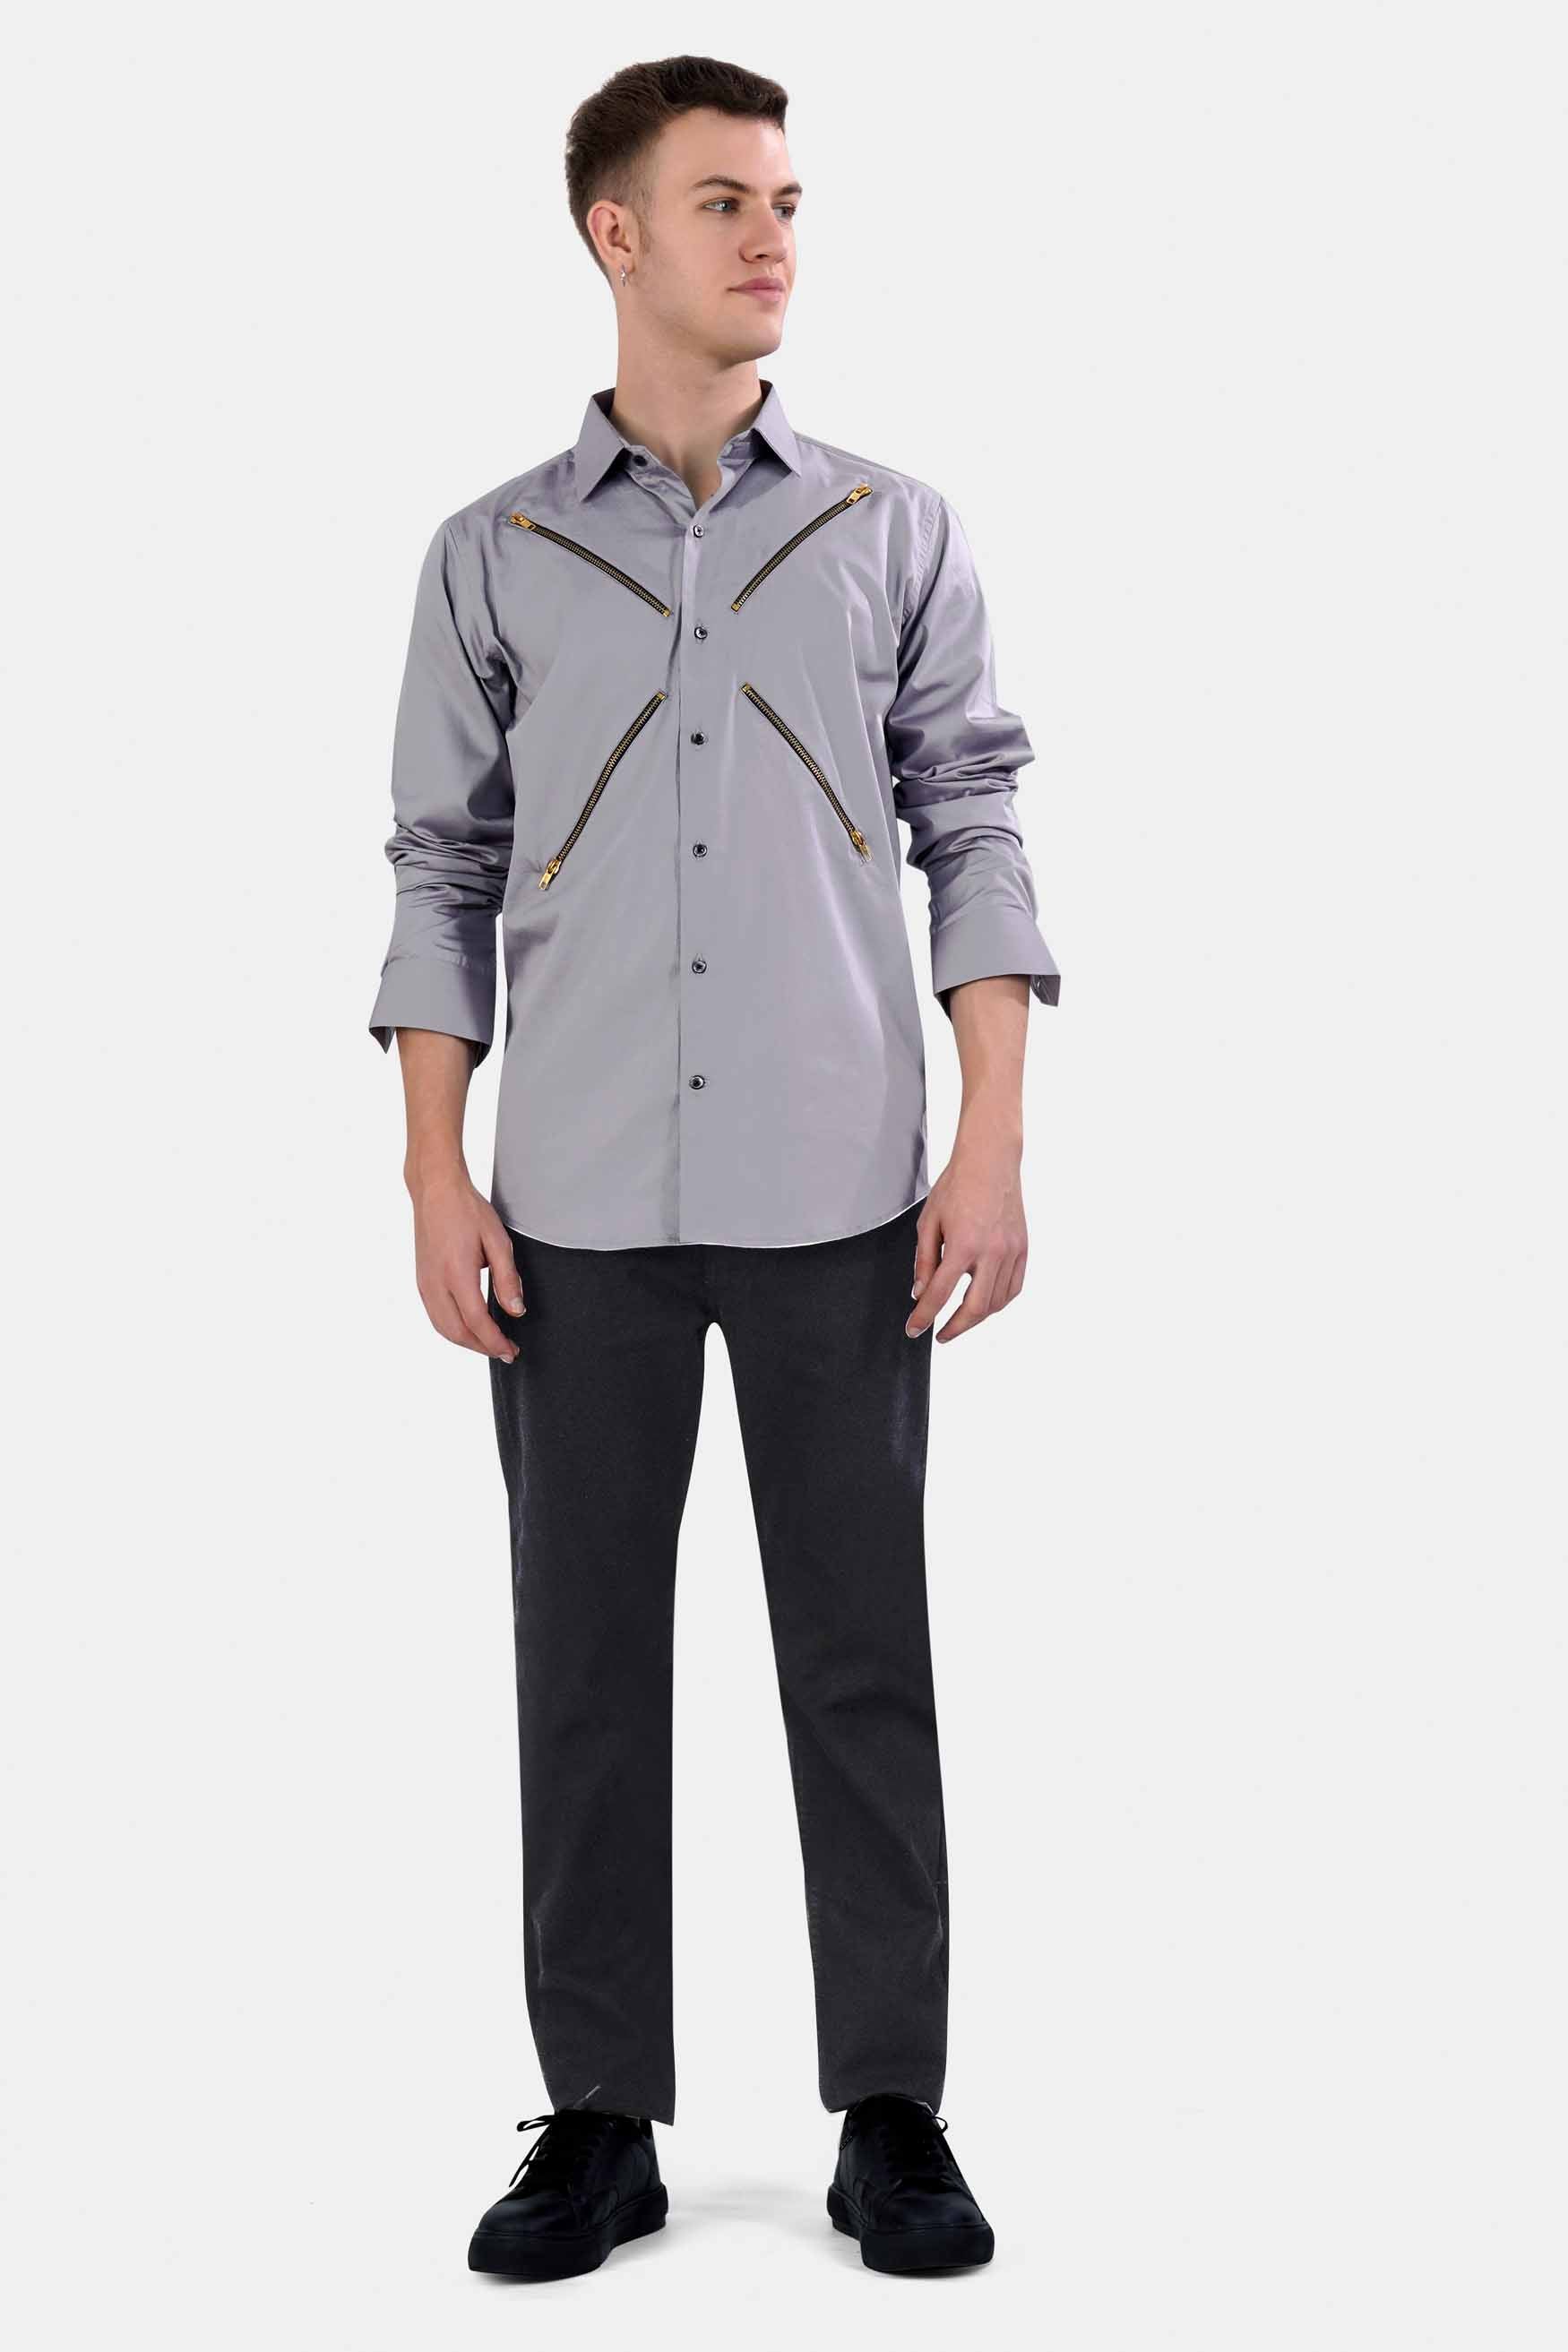 Boulder Gray Super Soft Premium Cotton Designer Shirt